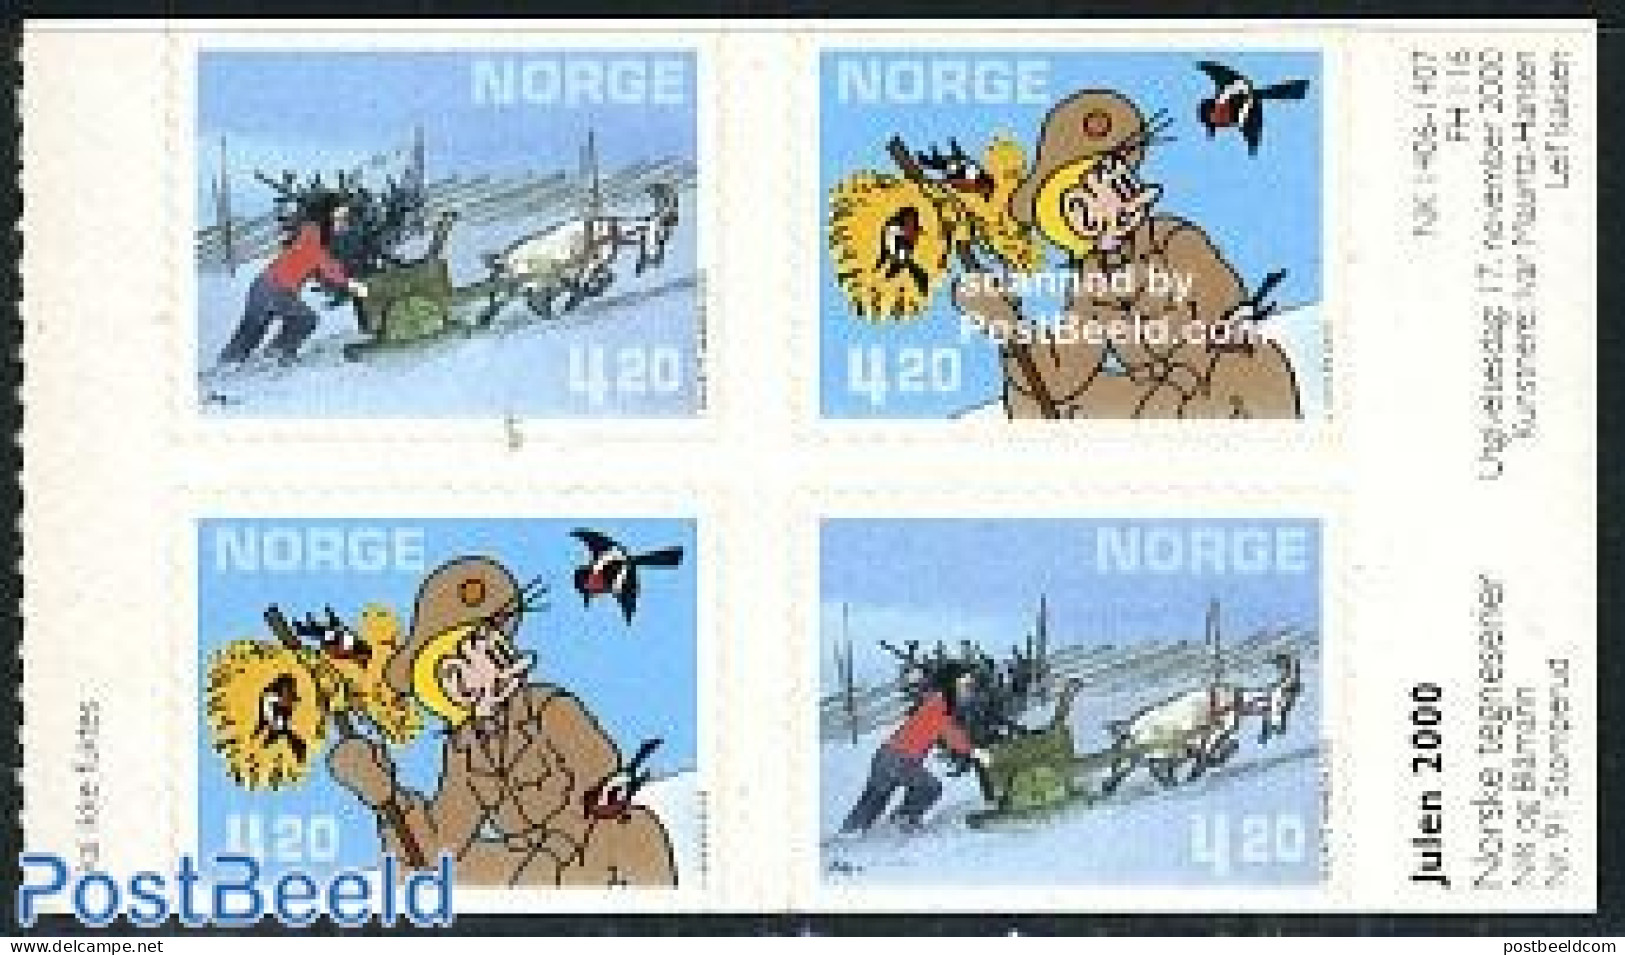 Norway 2000 Comics 2x2v S-a, Mint NH, Religion - Christmas - Art - Comics (except Disney) - Ungebraucht